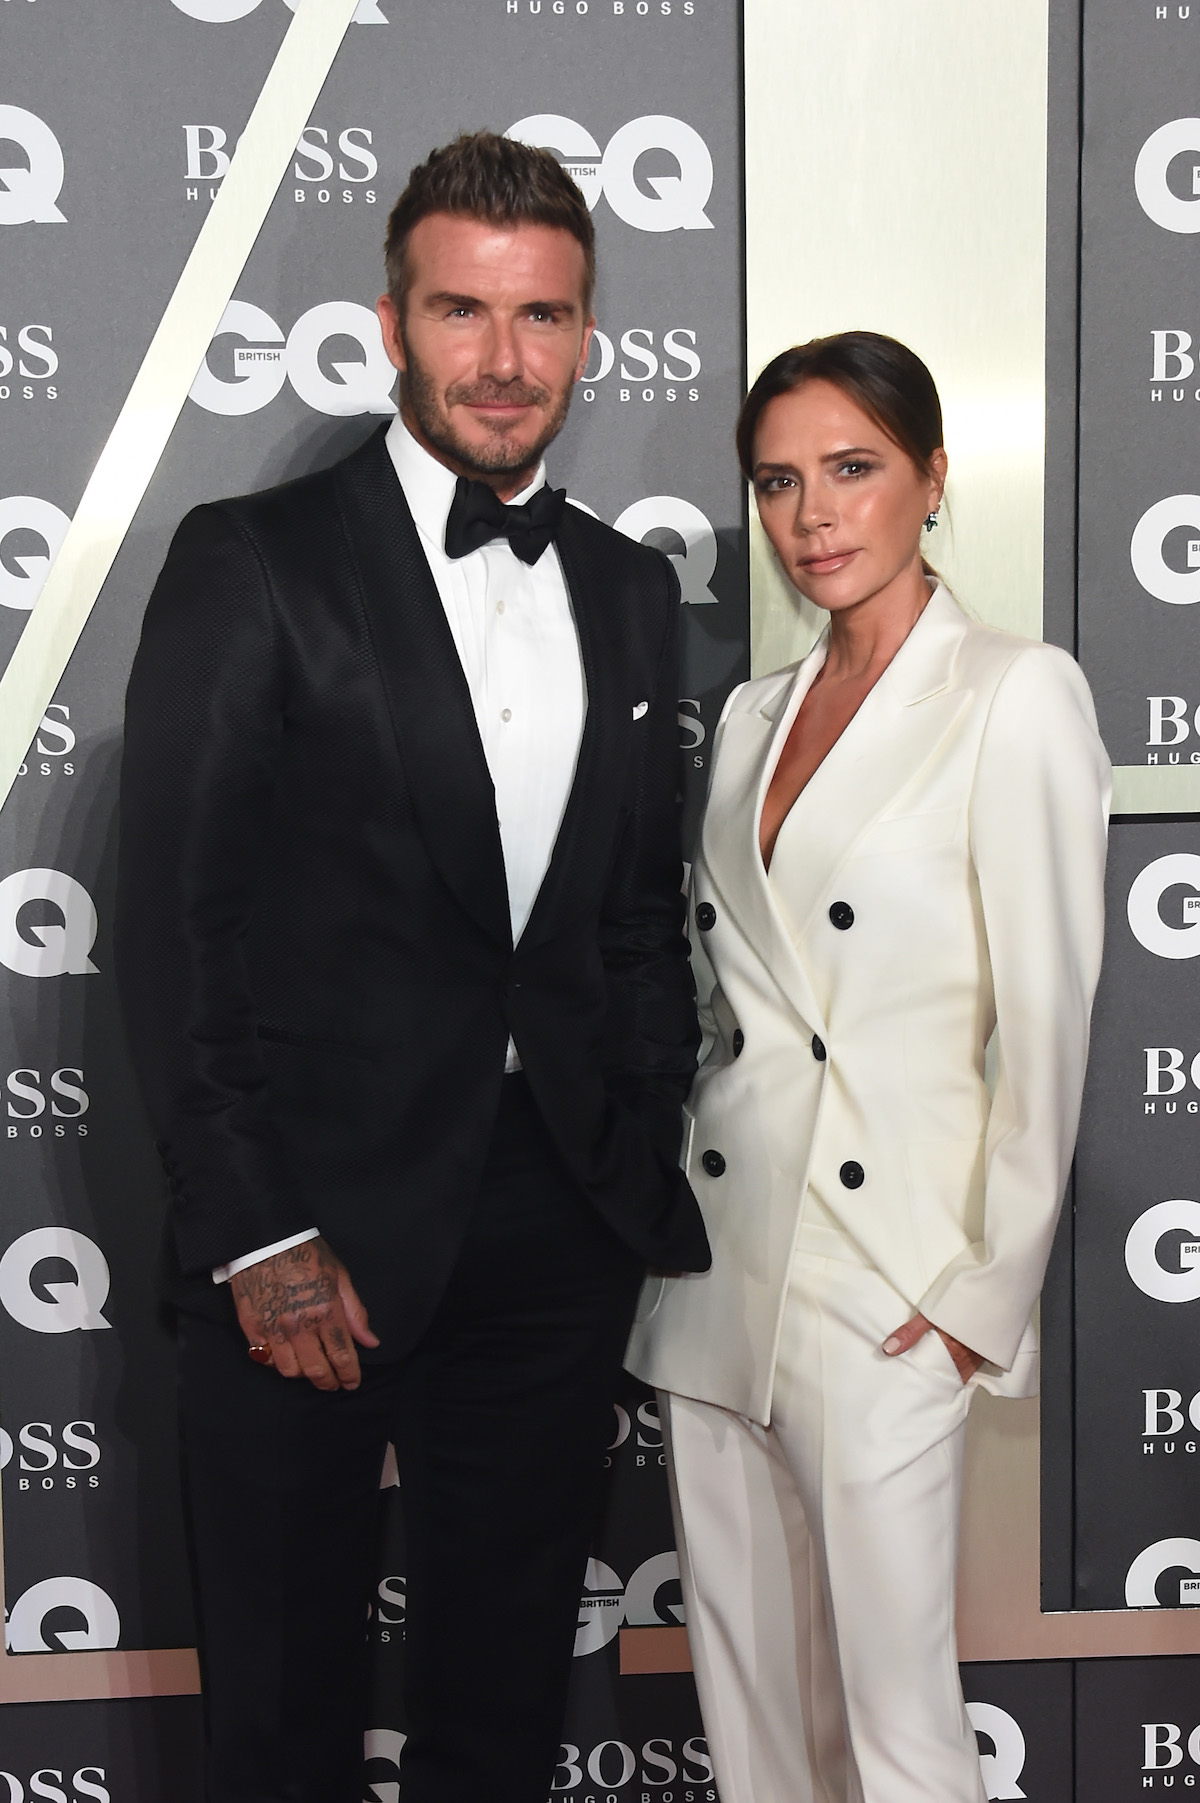 David Beckham and Victoria Beckham pose together at an event.